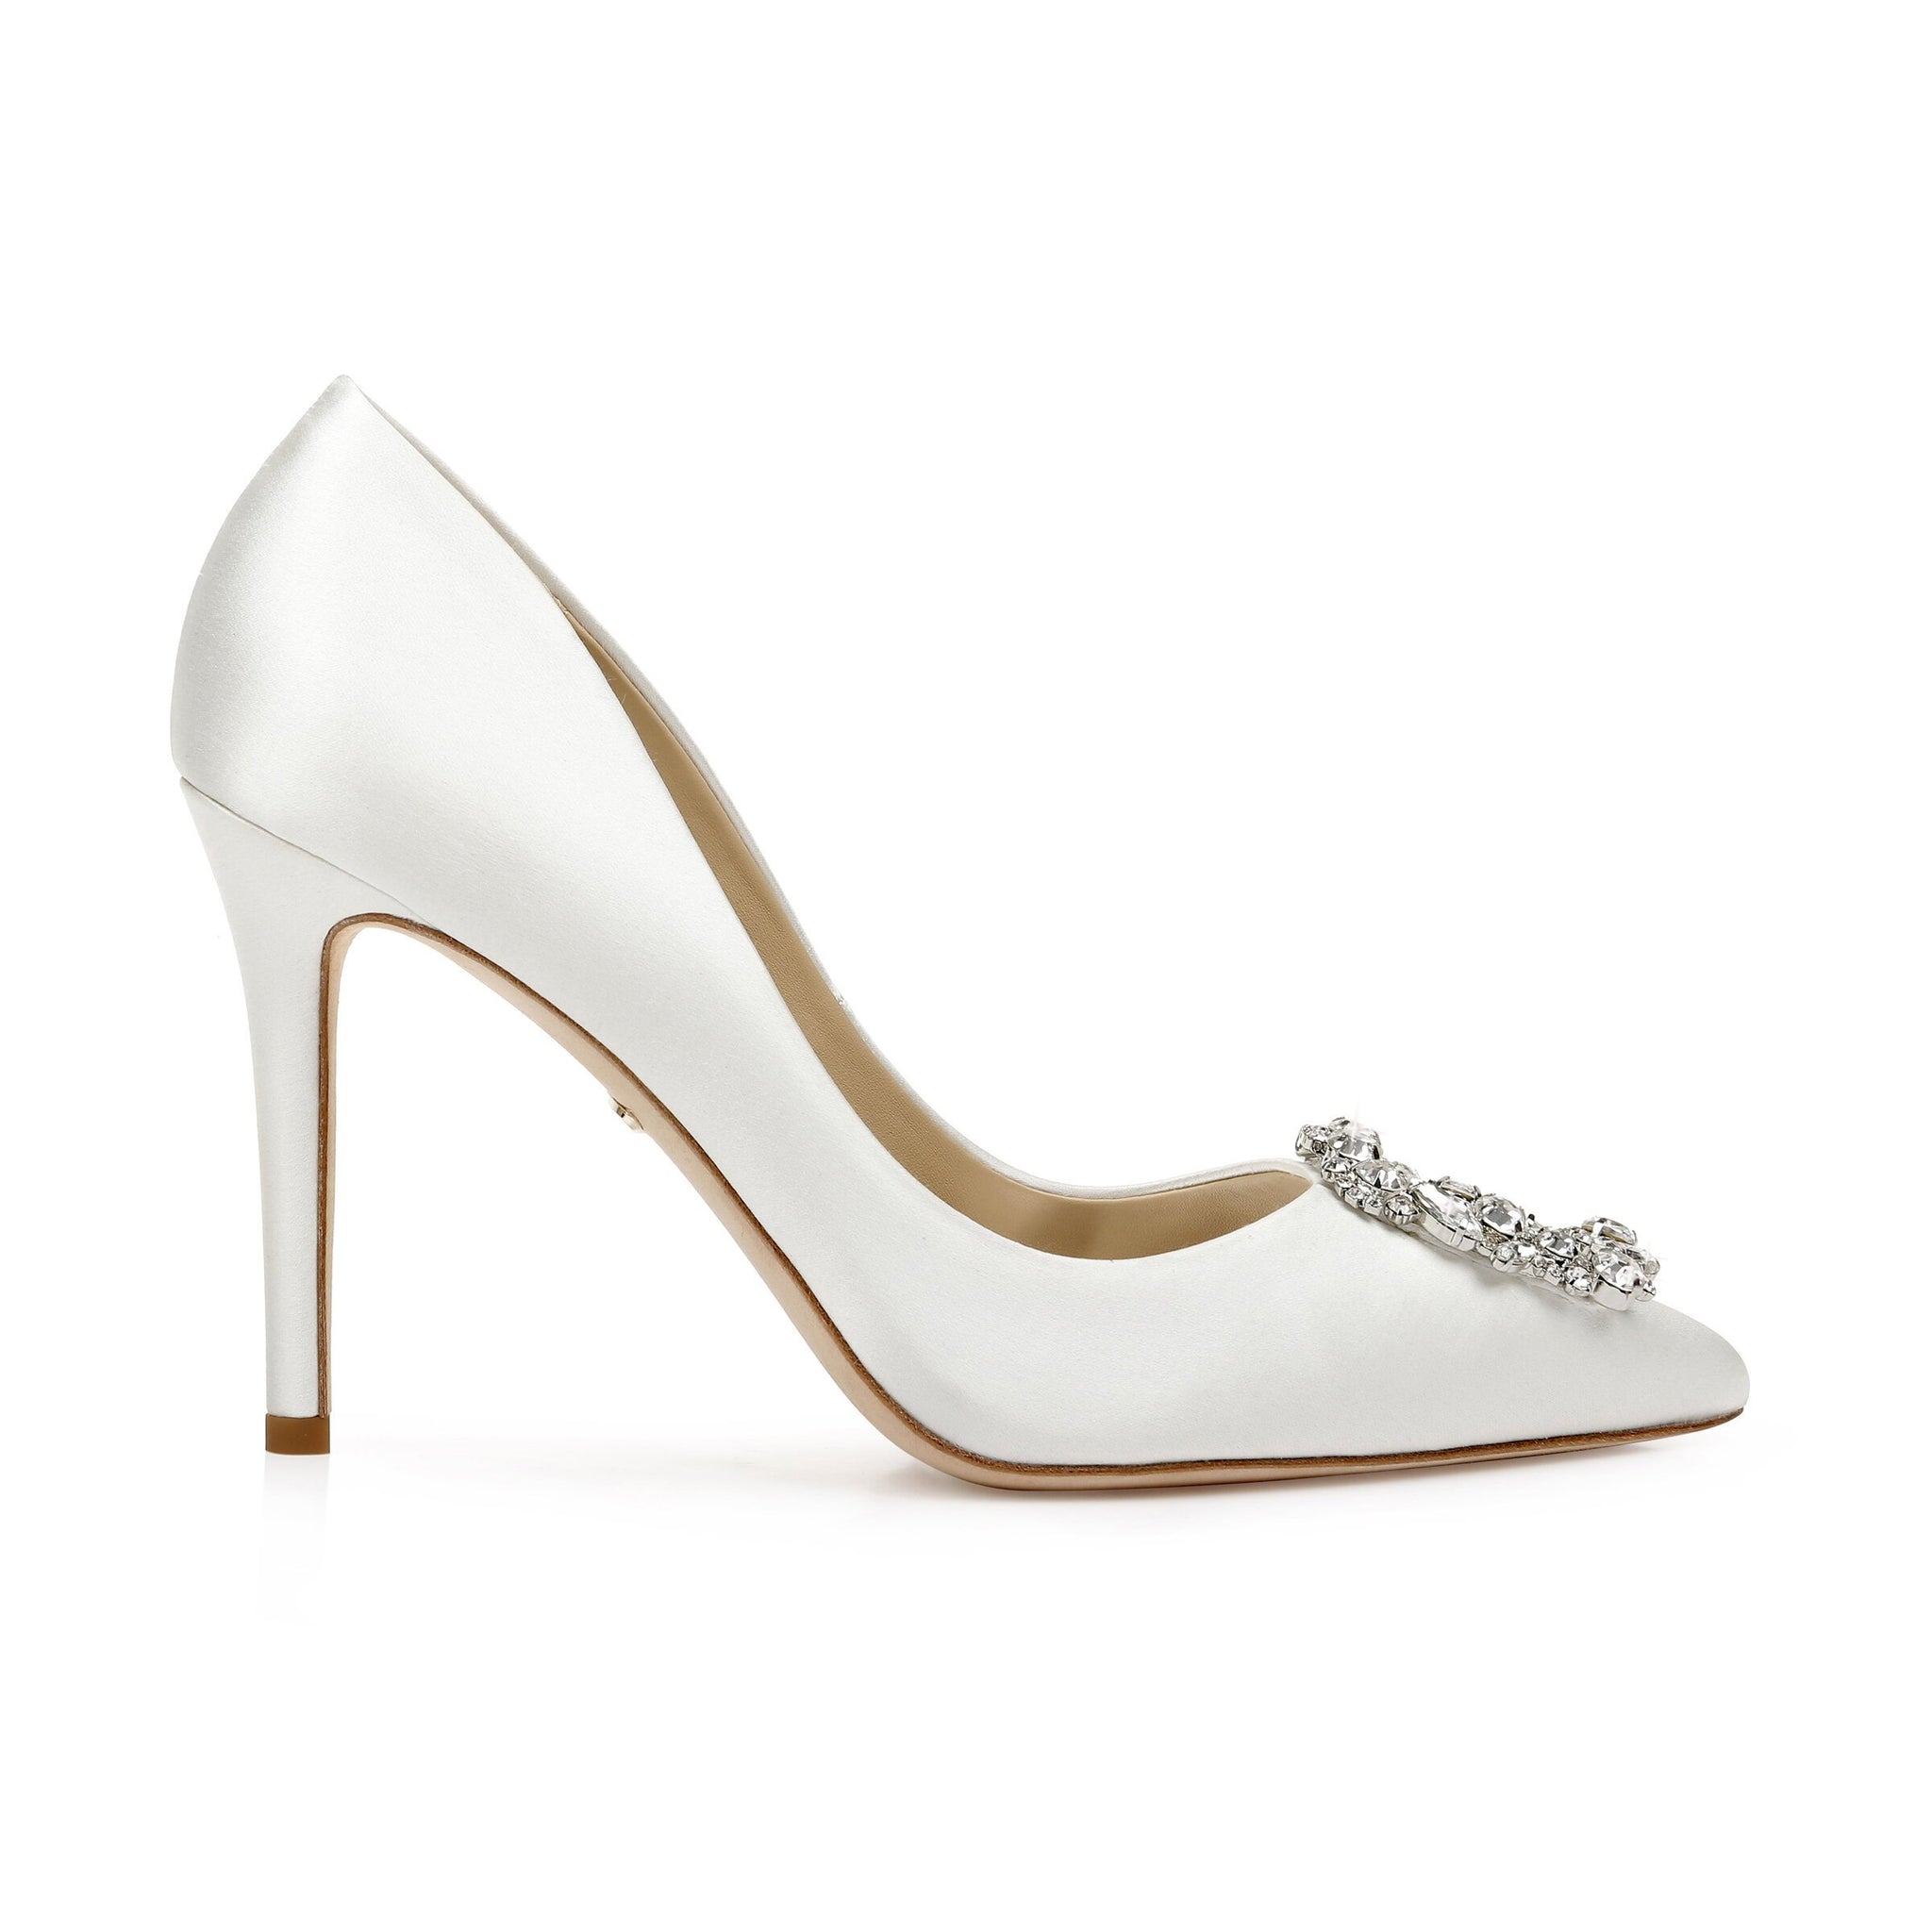 Badgley Mischka Cher Buckle Pointed Wedding Shoes - White